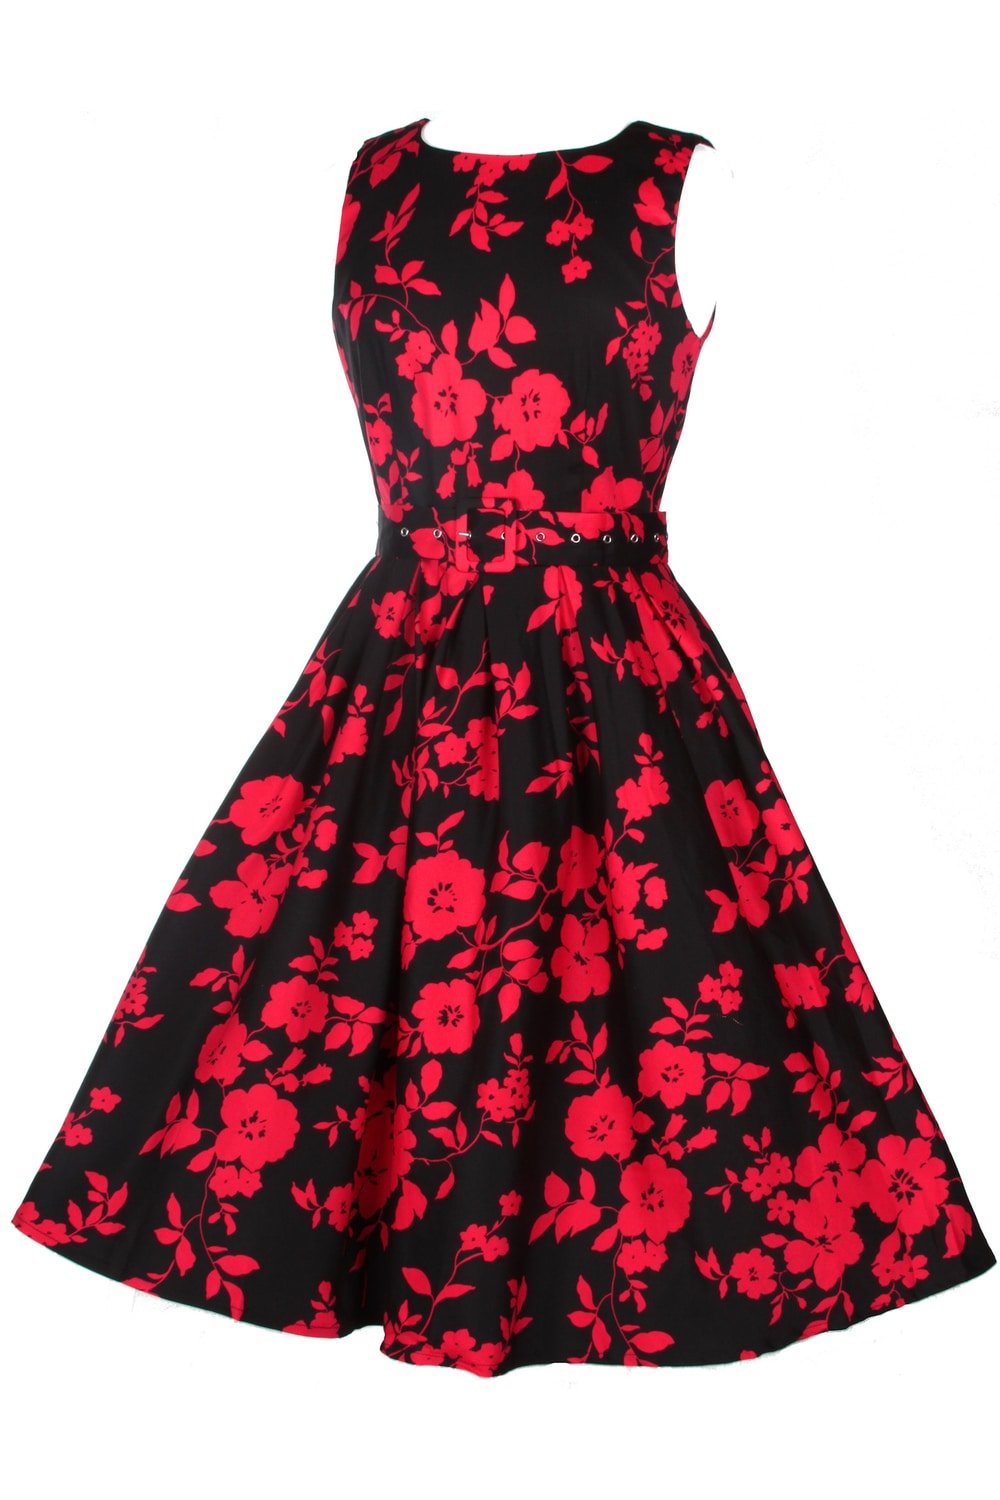 Women's Black & Red Floral Swing Dress side view